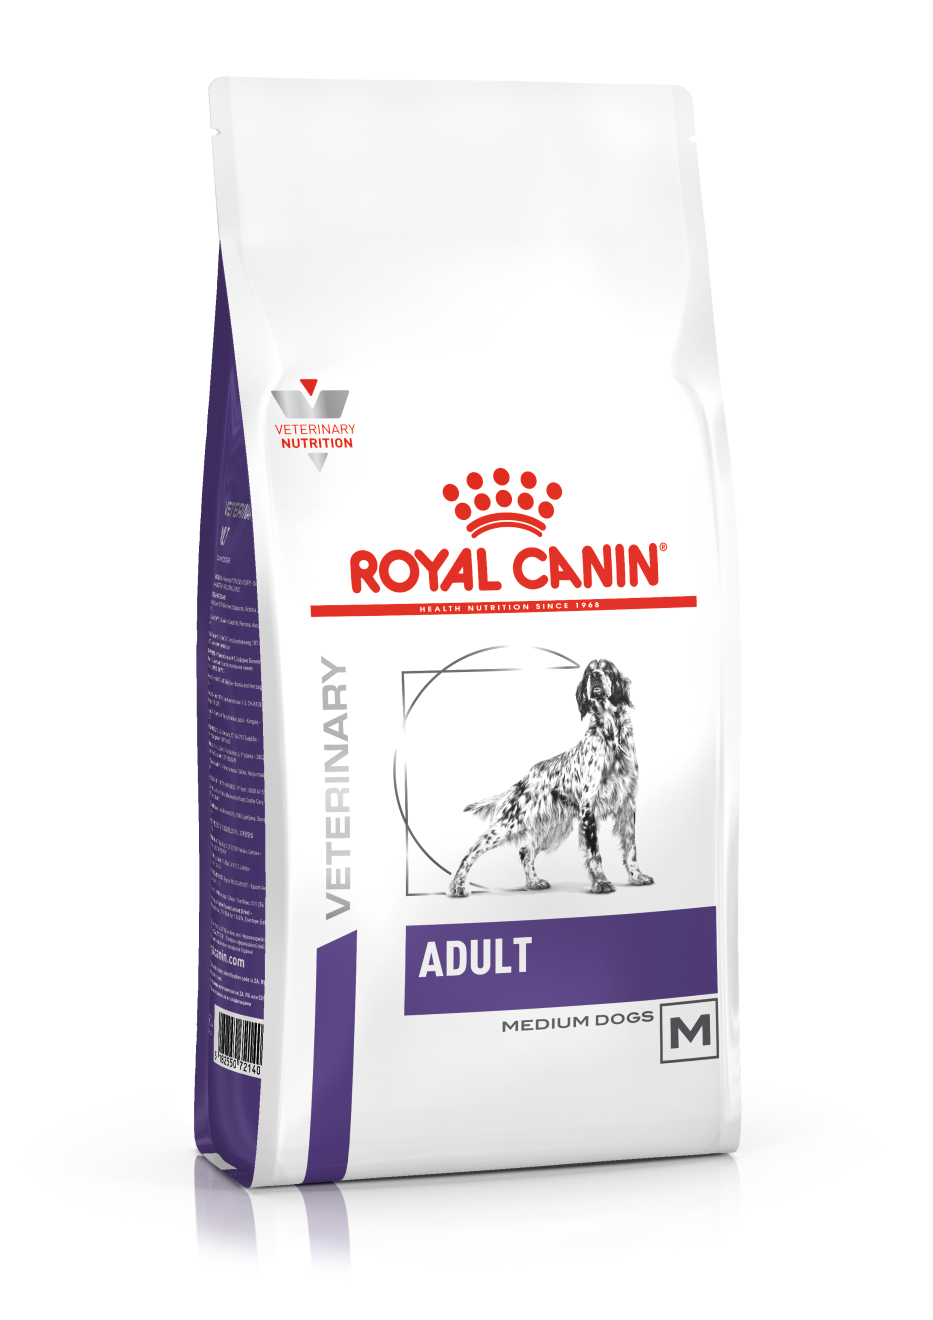 Royal canin Adult Medium Dog  1 x 4 kg